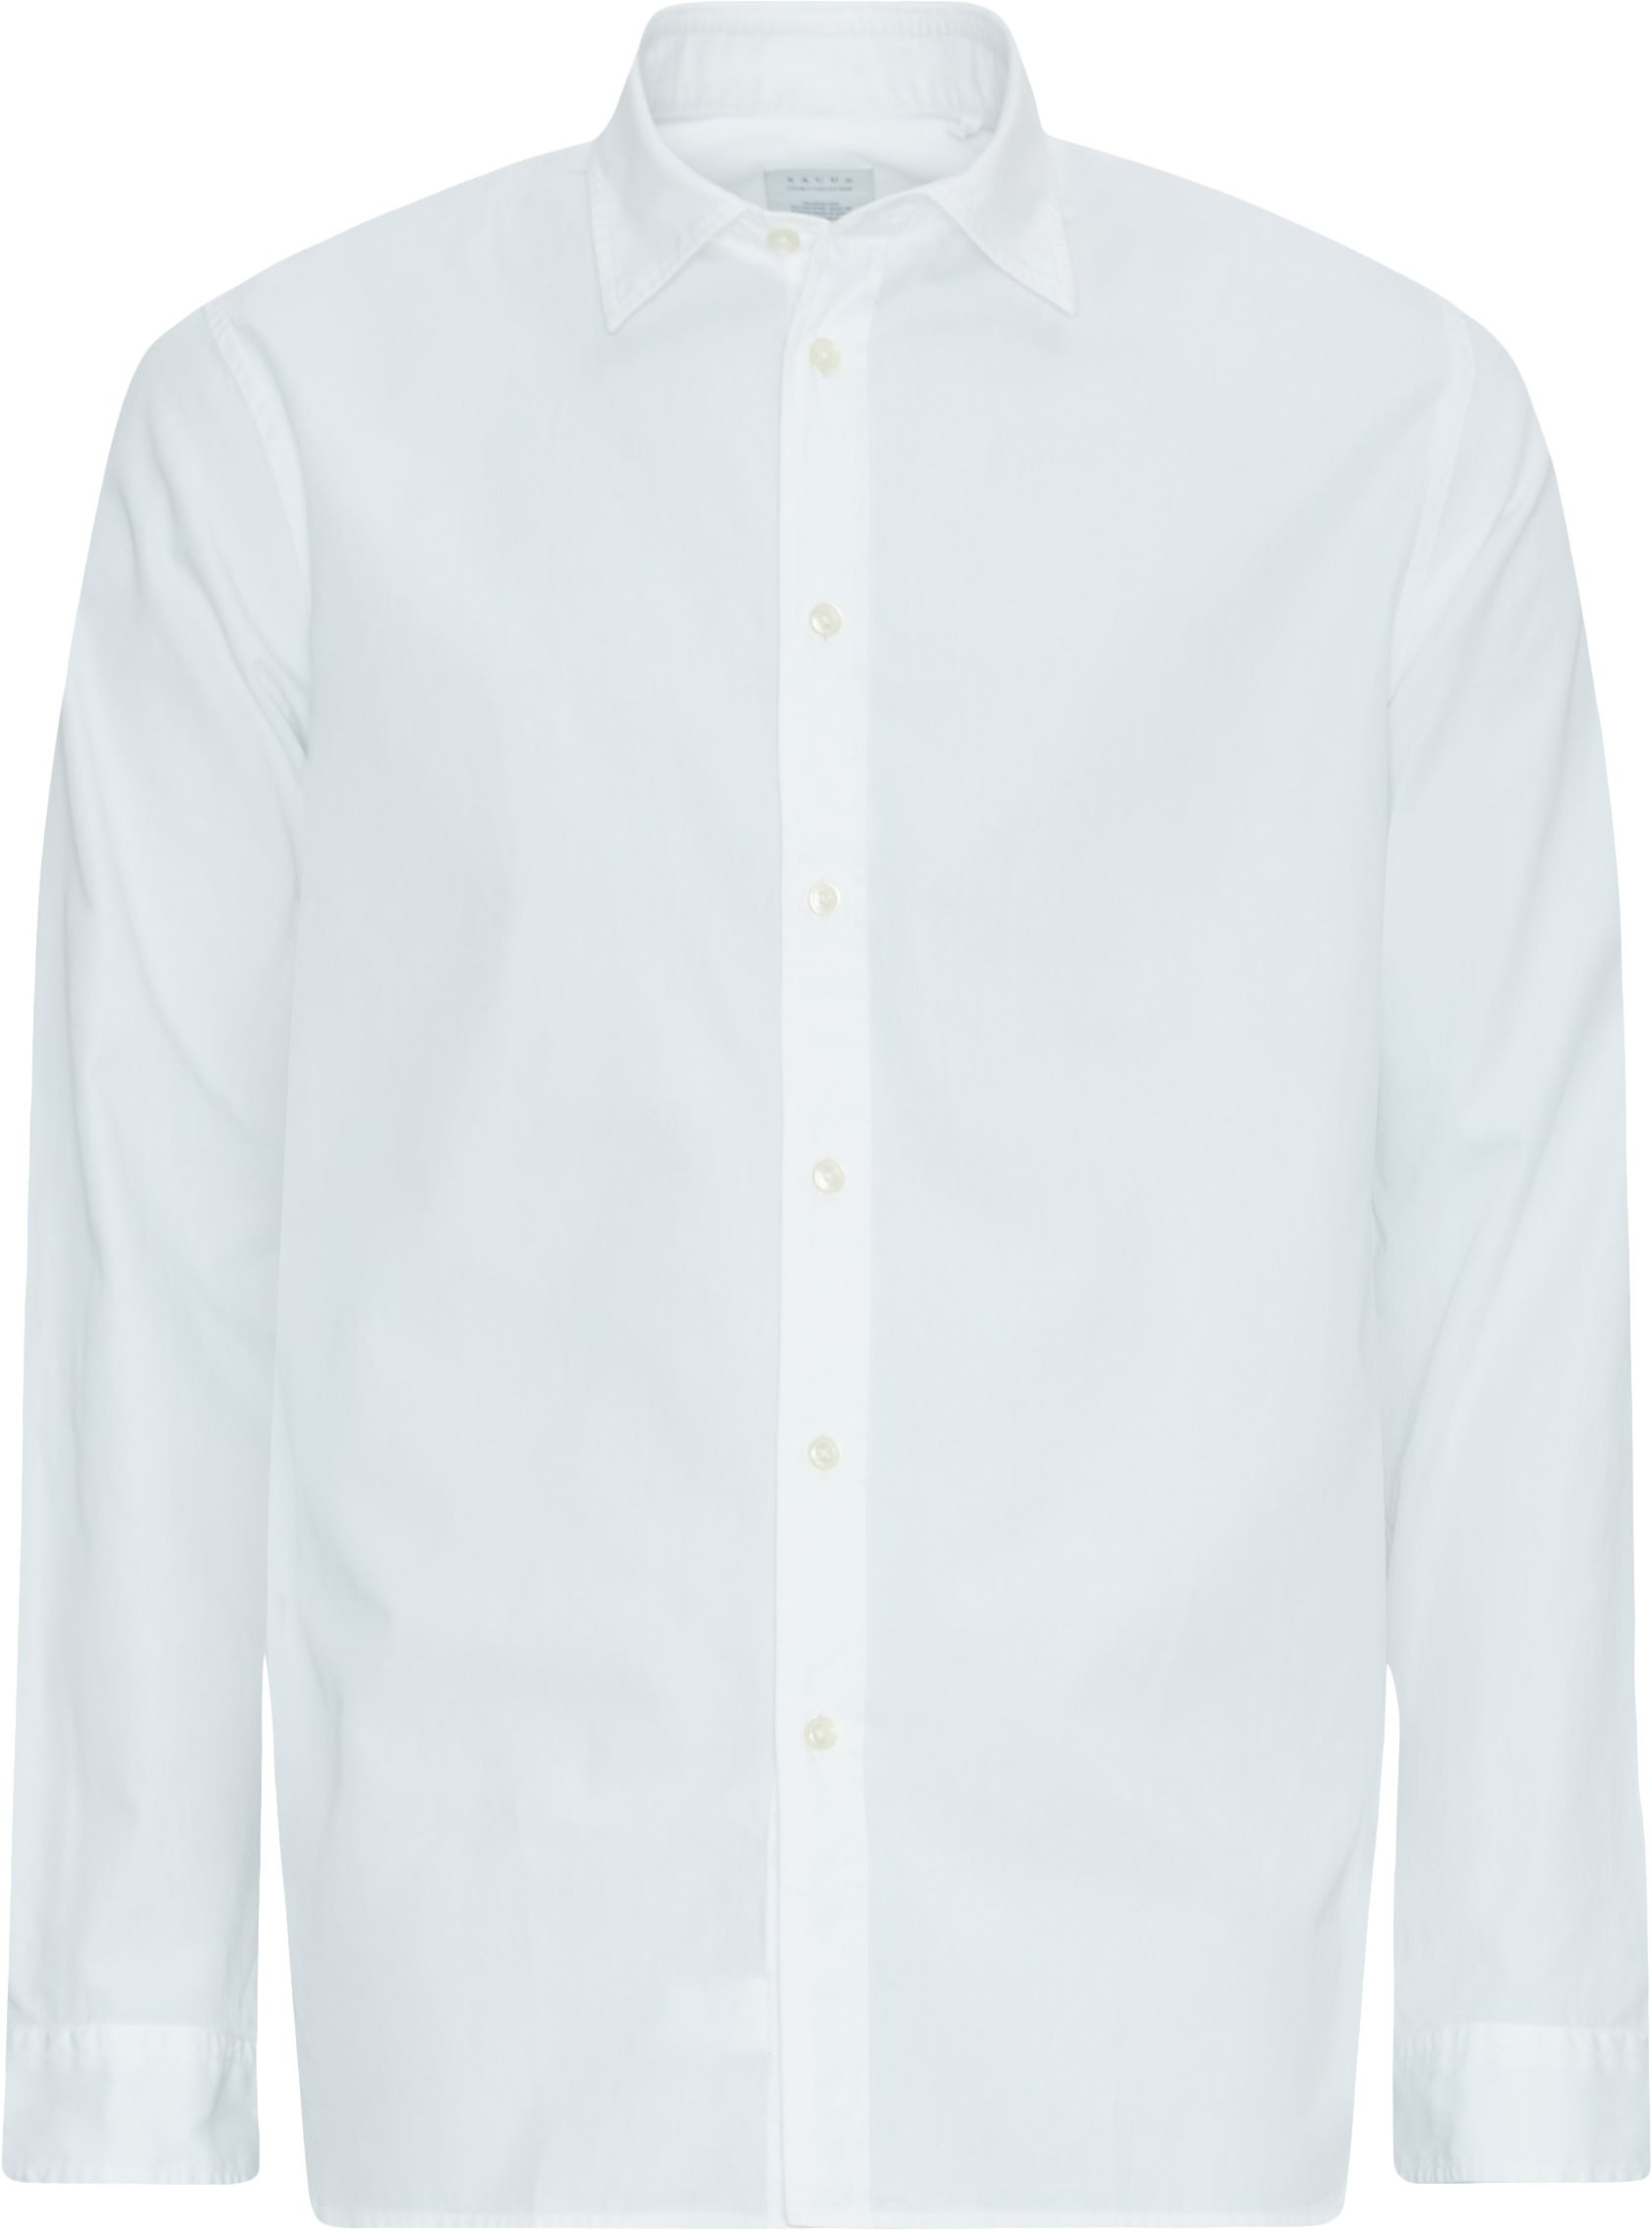 Xacus Shirts 61190 428 White